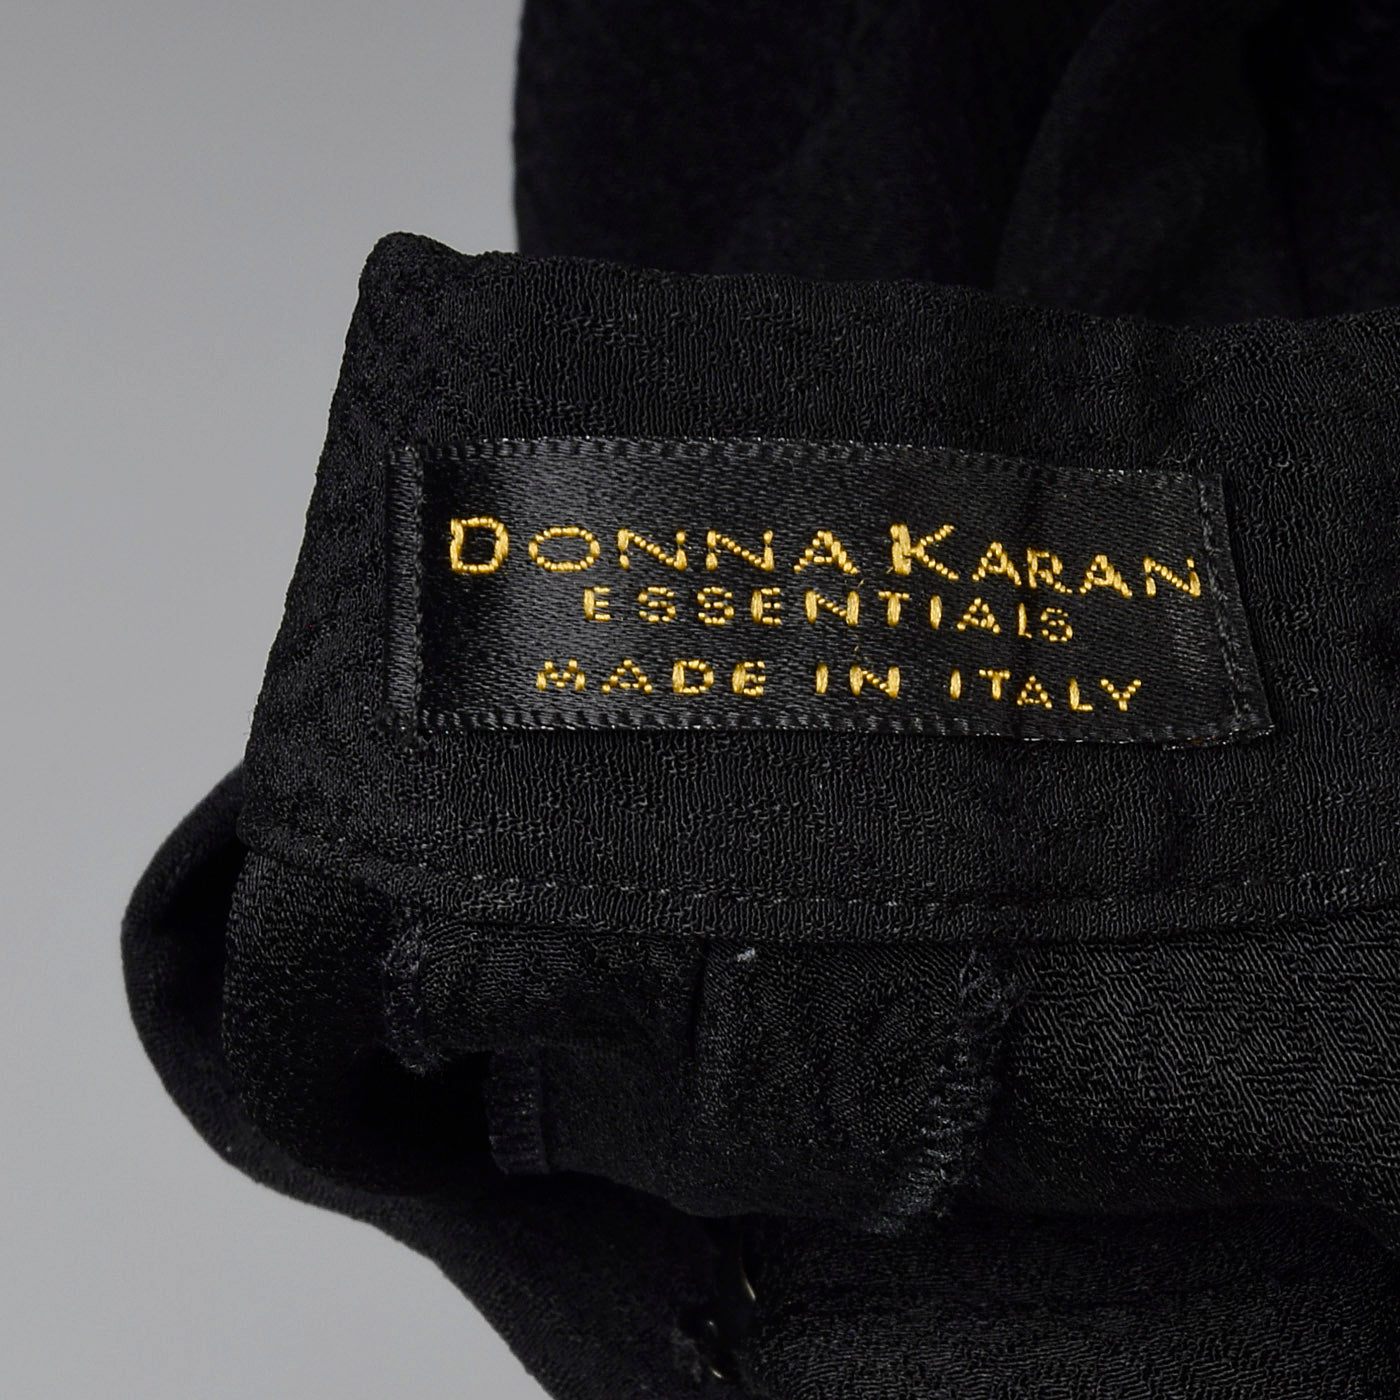 1980s Donna Karan Textured Black Pants with Tapered Leg